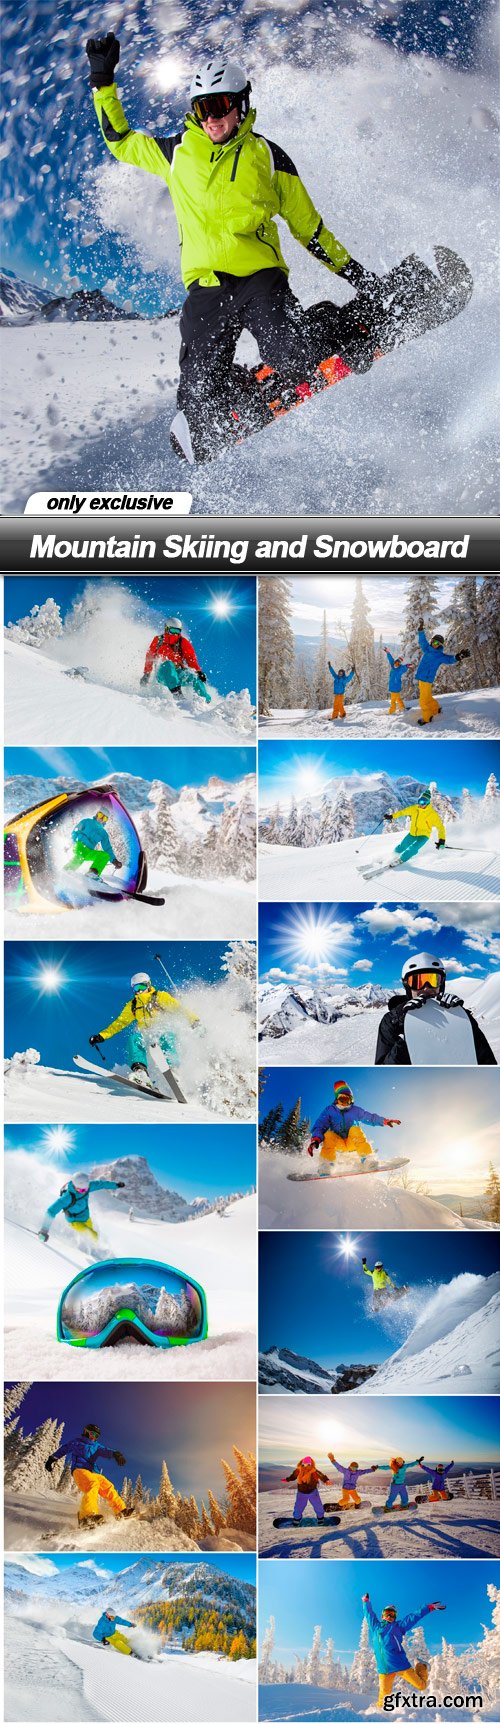 Mountain Skiing and Snowboard - 14 UHQ JPEG